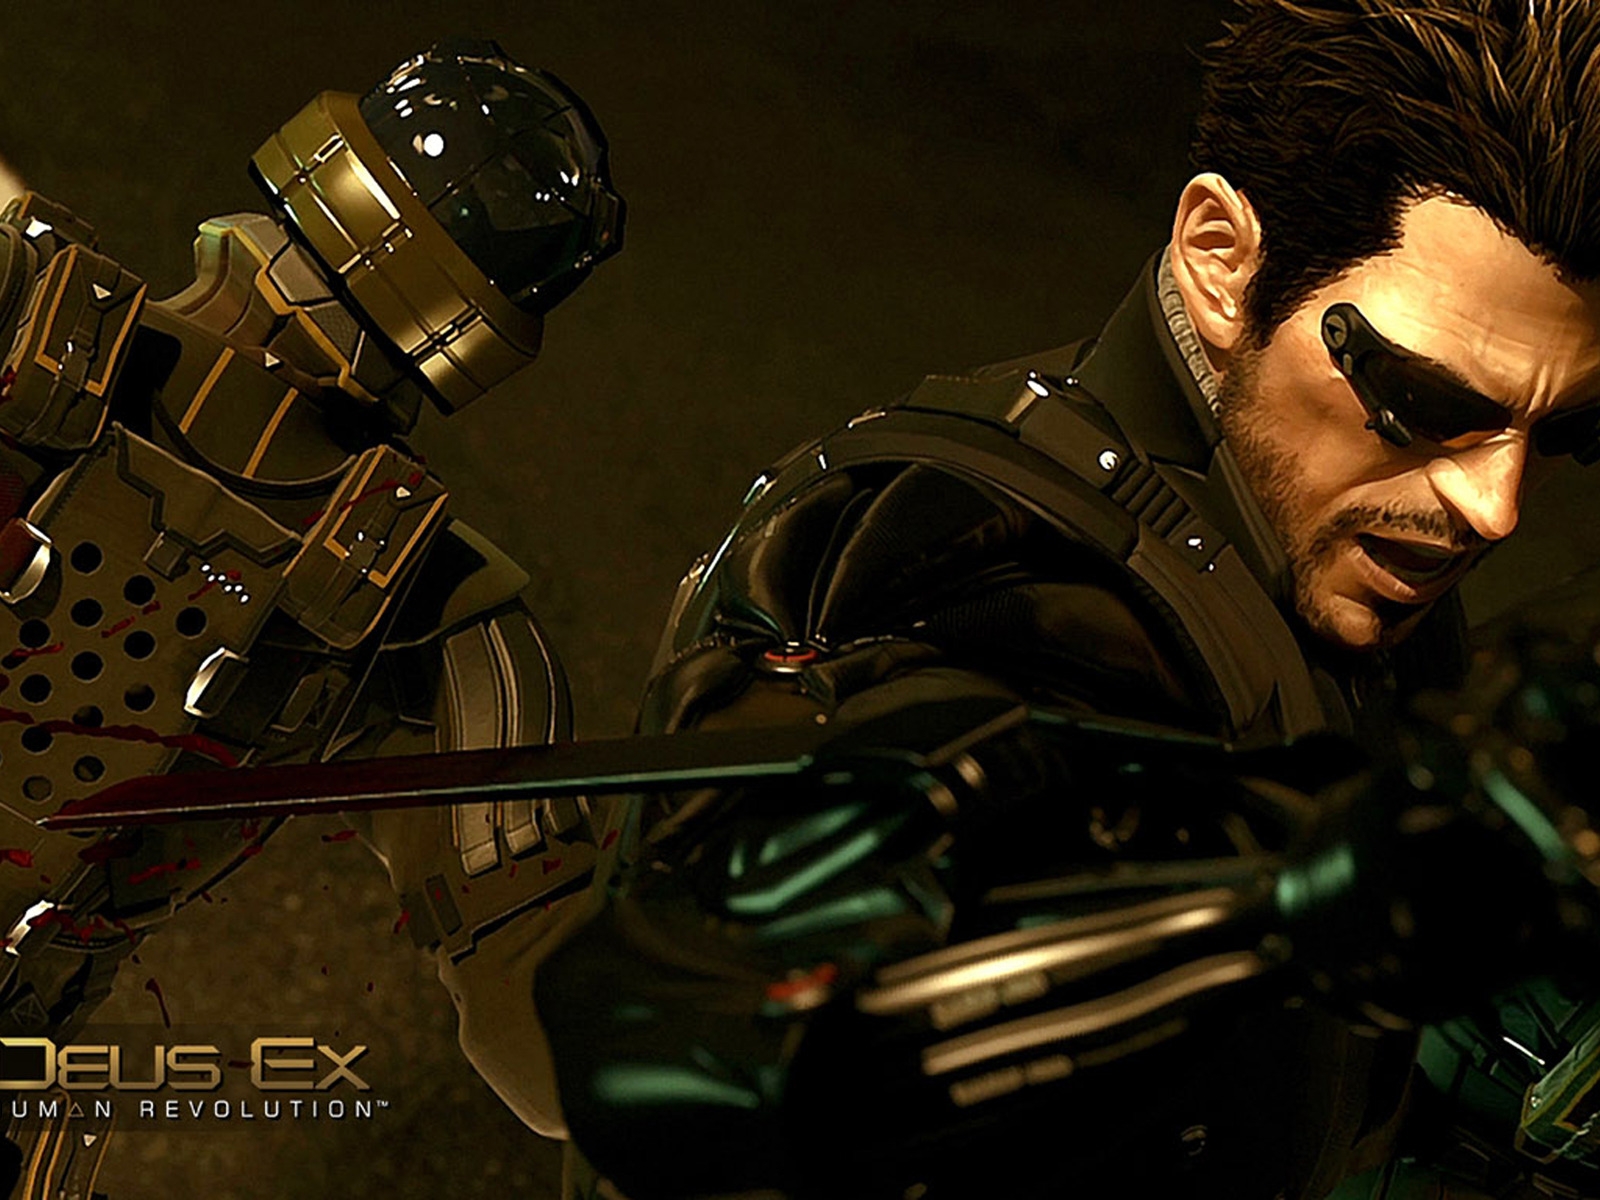 Deus Ex Human Revolution Poster for 1600 x 1200 resolution